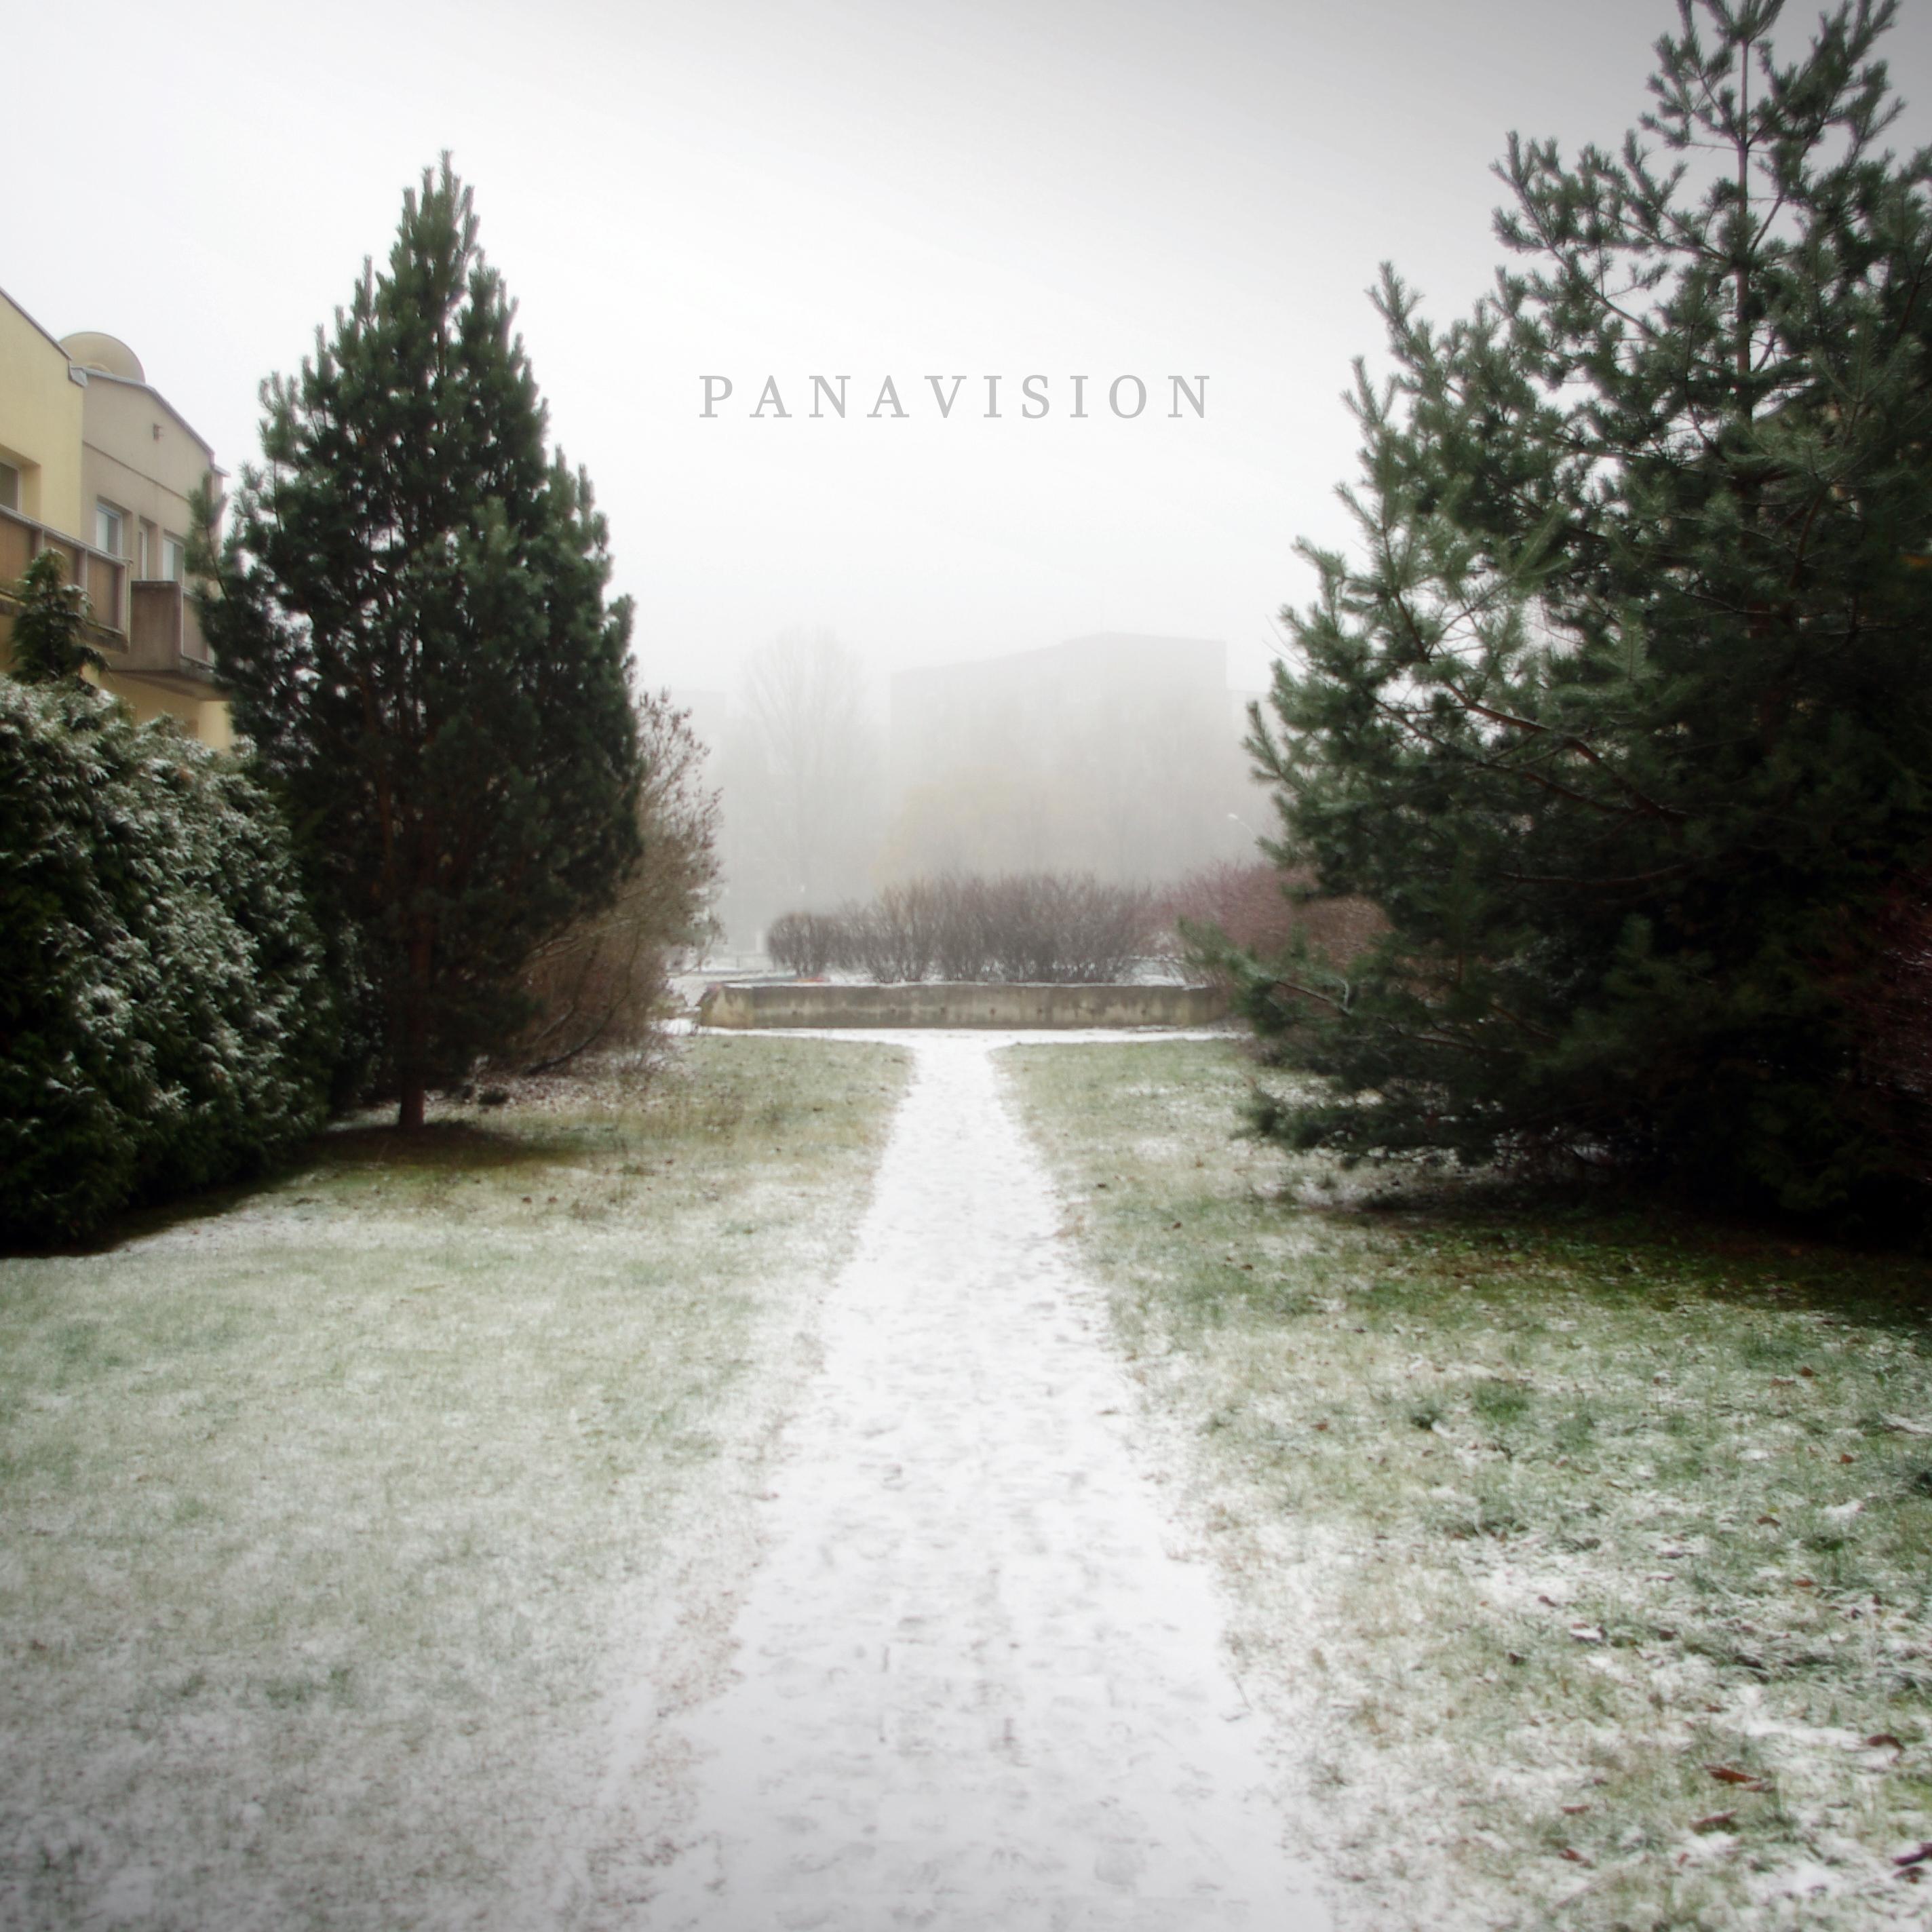 image cover: Sraunus - Panavision / Not On Label (Sraunus Self-released)